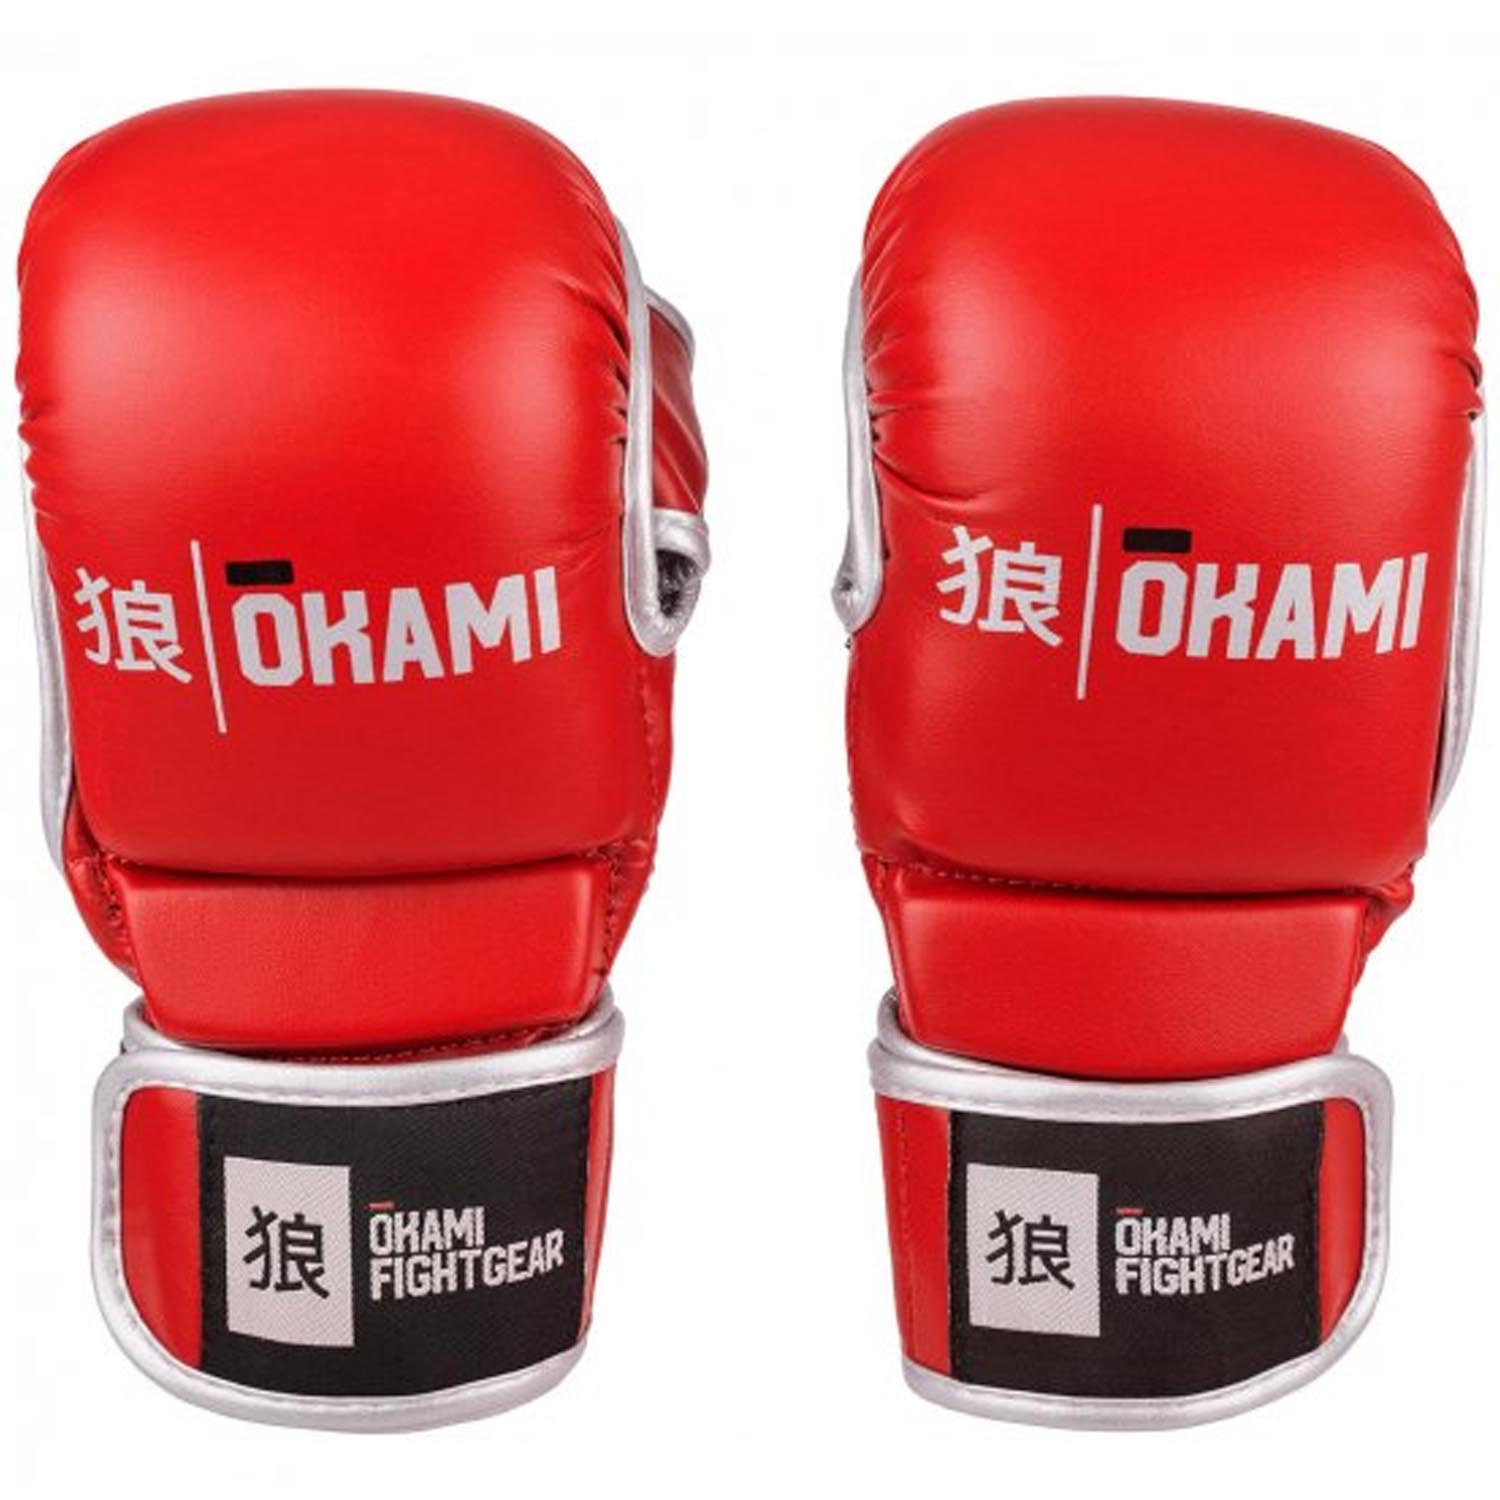 OKAMI MMA Boxing Gloves, Combat, red, L